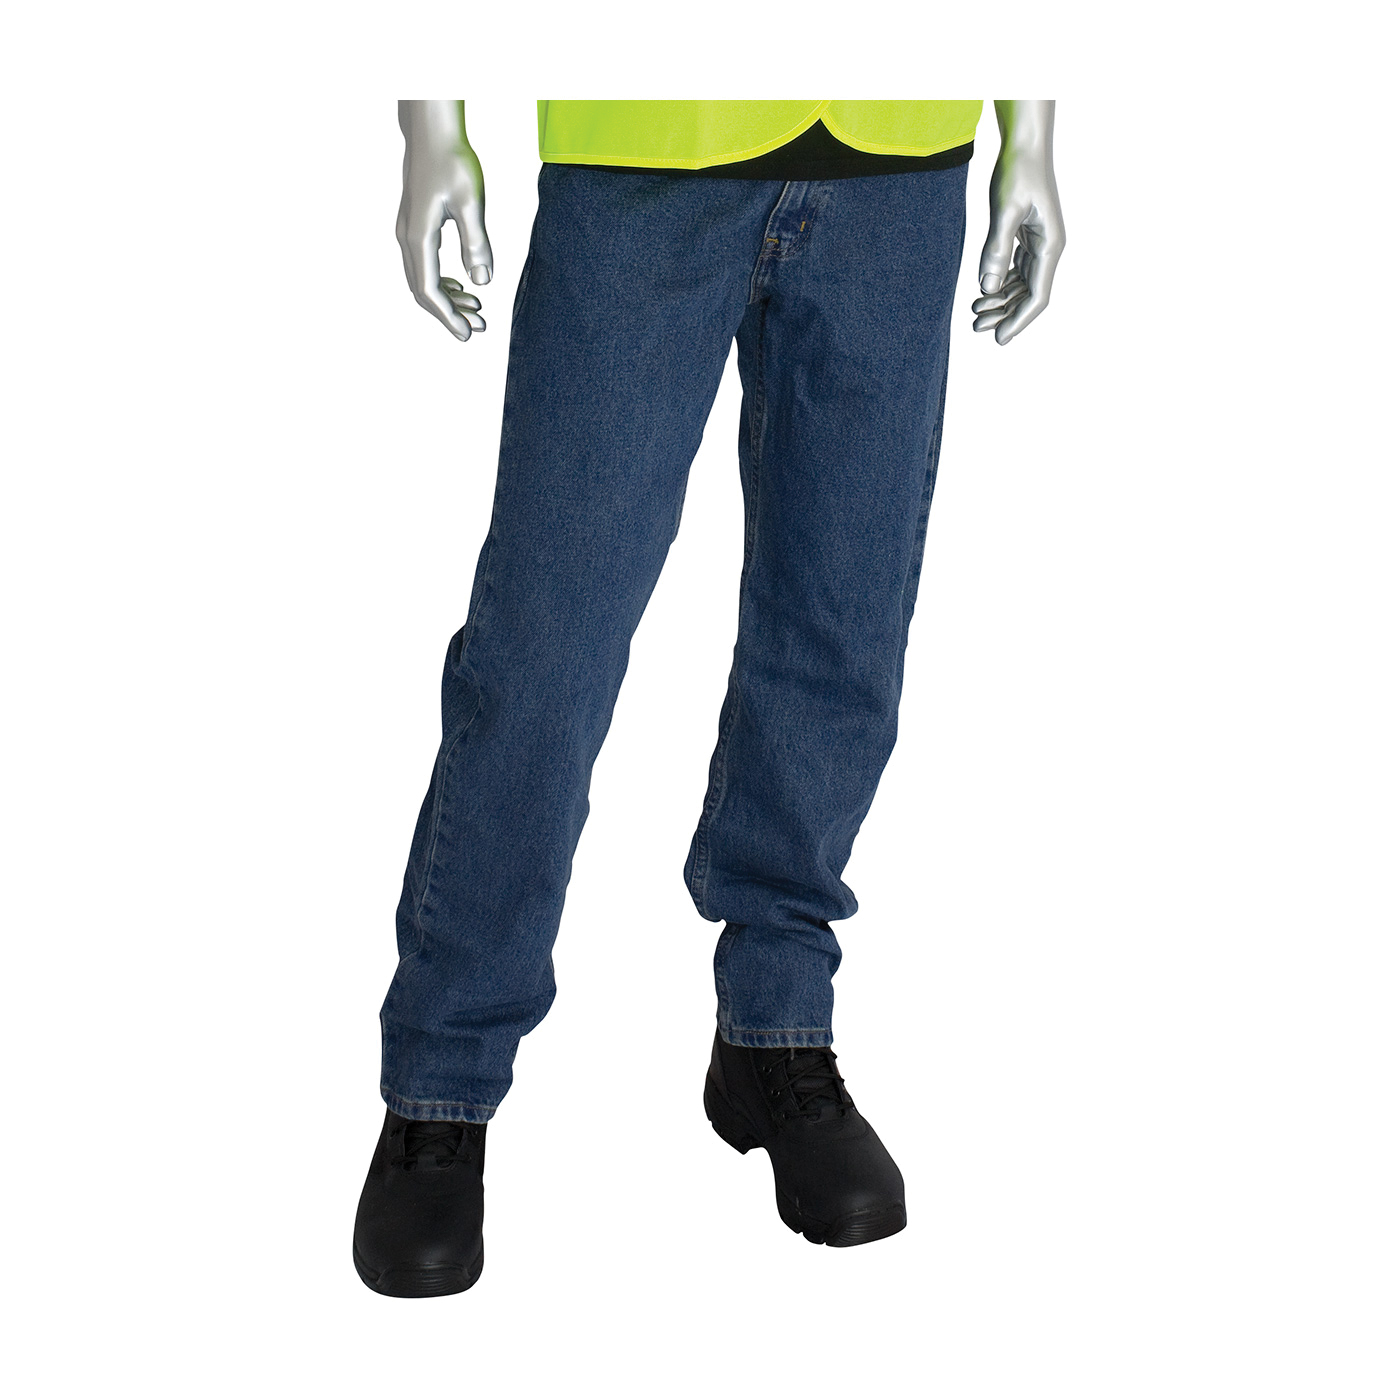 PIP® 385-FRRJ-3434 Carpenter Jeans, 34 in Waist, 34 in L Inseam, Blue Denim, Cotton